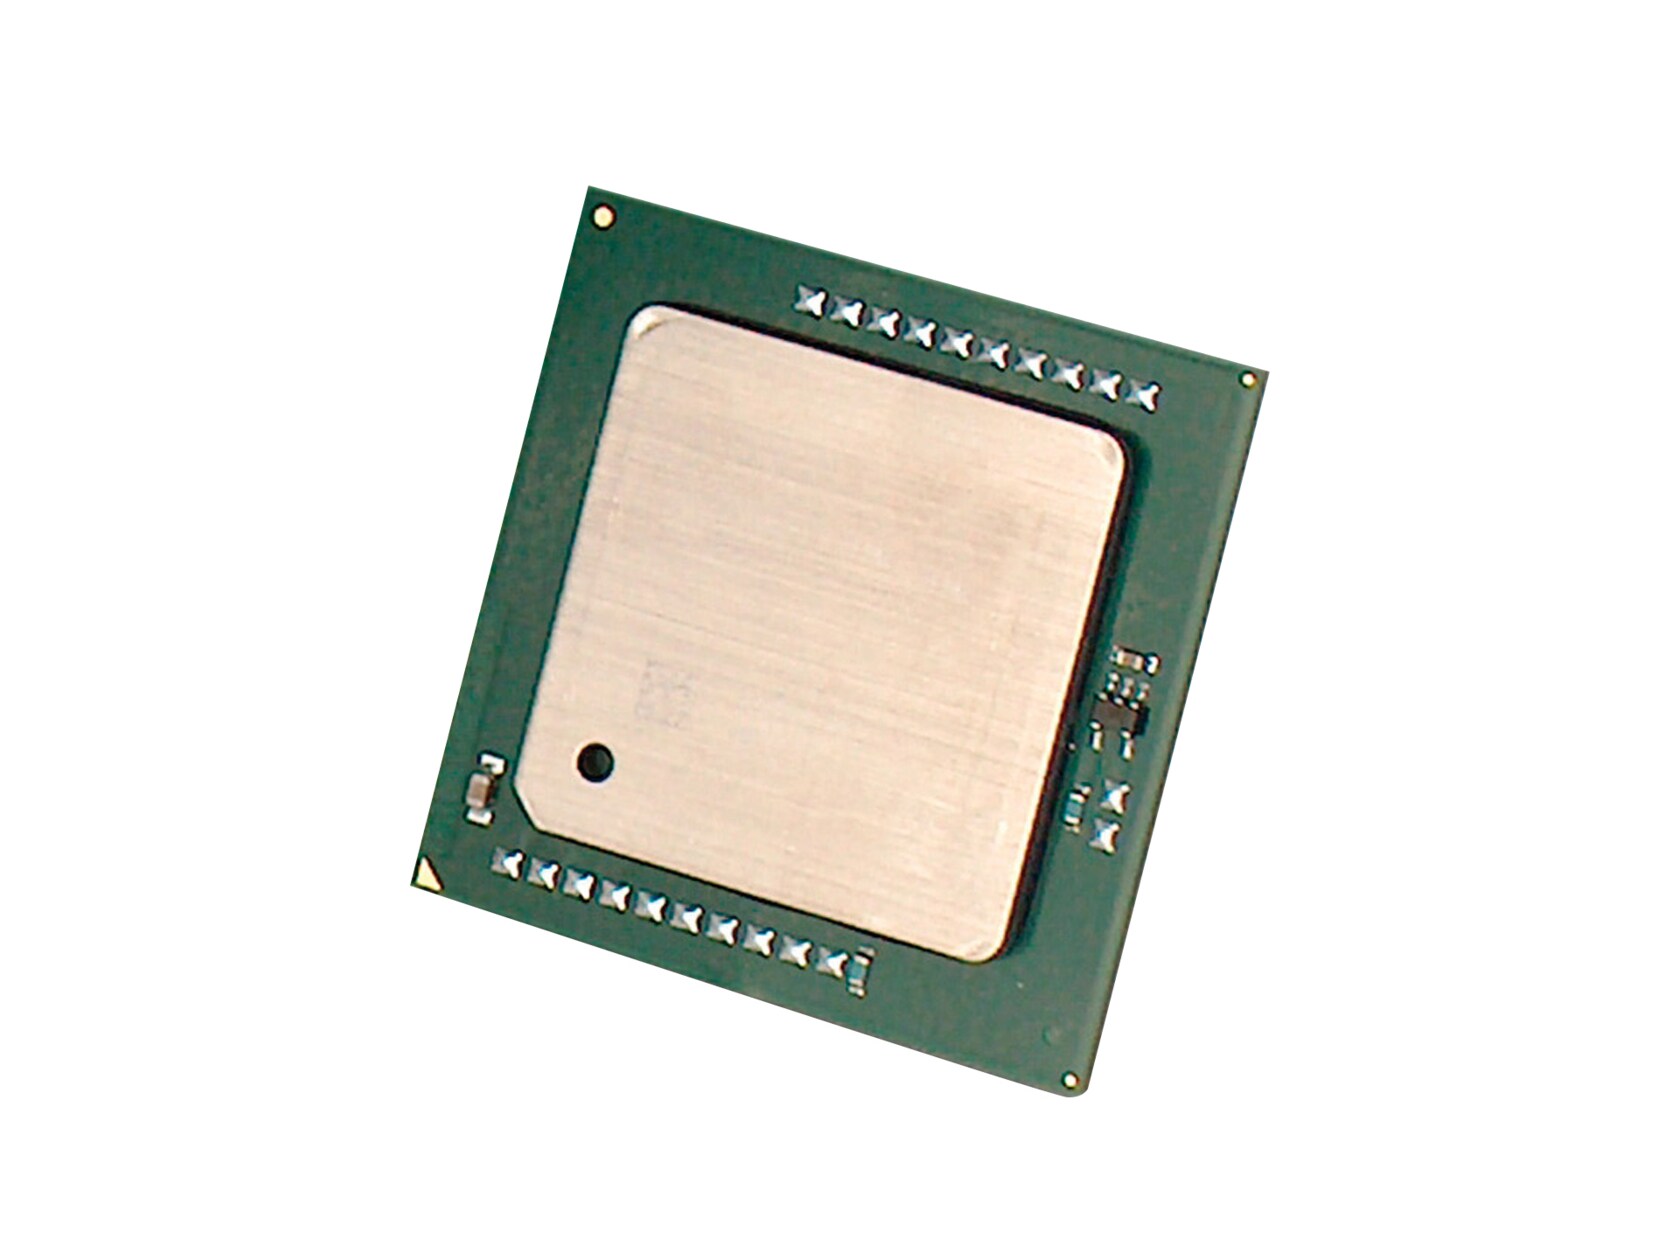 HPE Synergy 480/660 Gen10 Intel Xeon Platinum 8260M (2.4GHz) Processor Kit